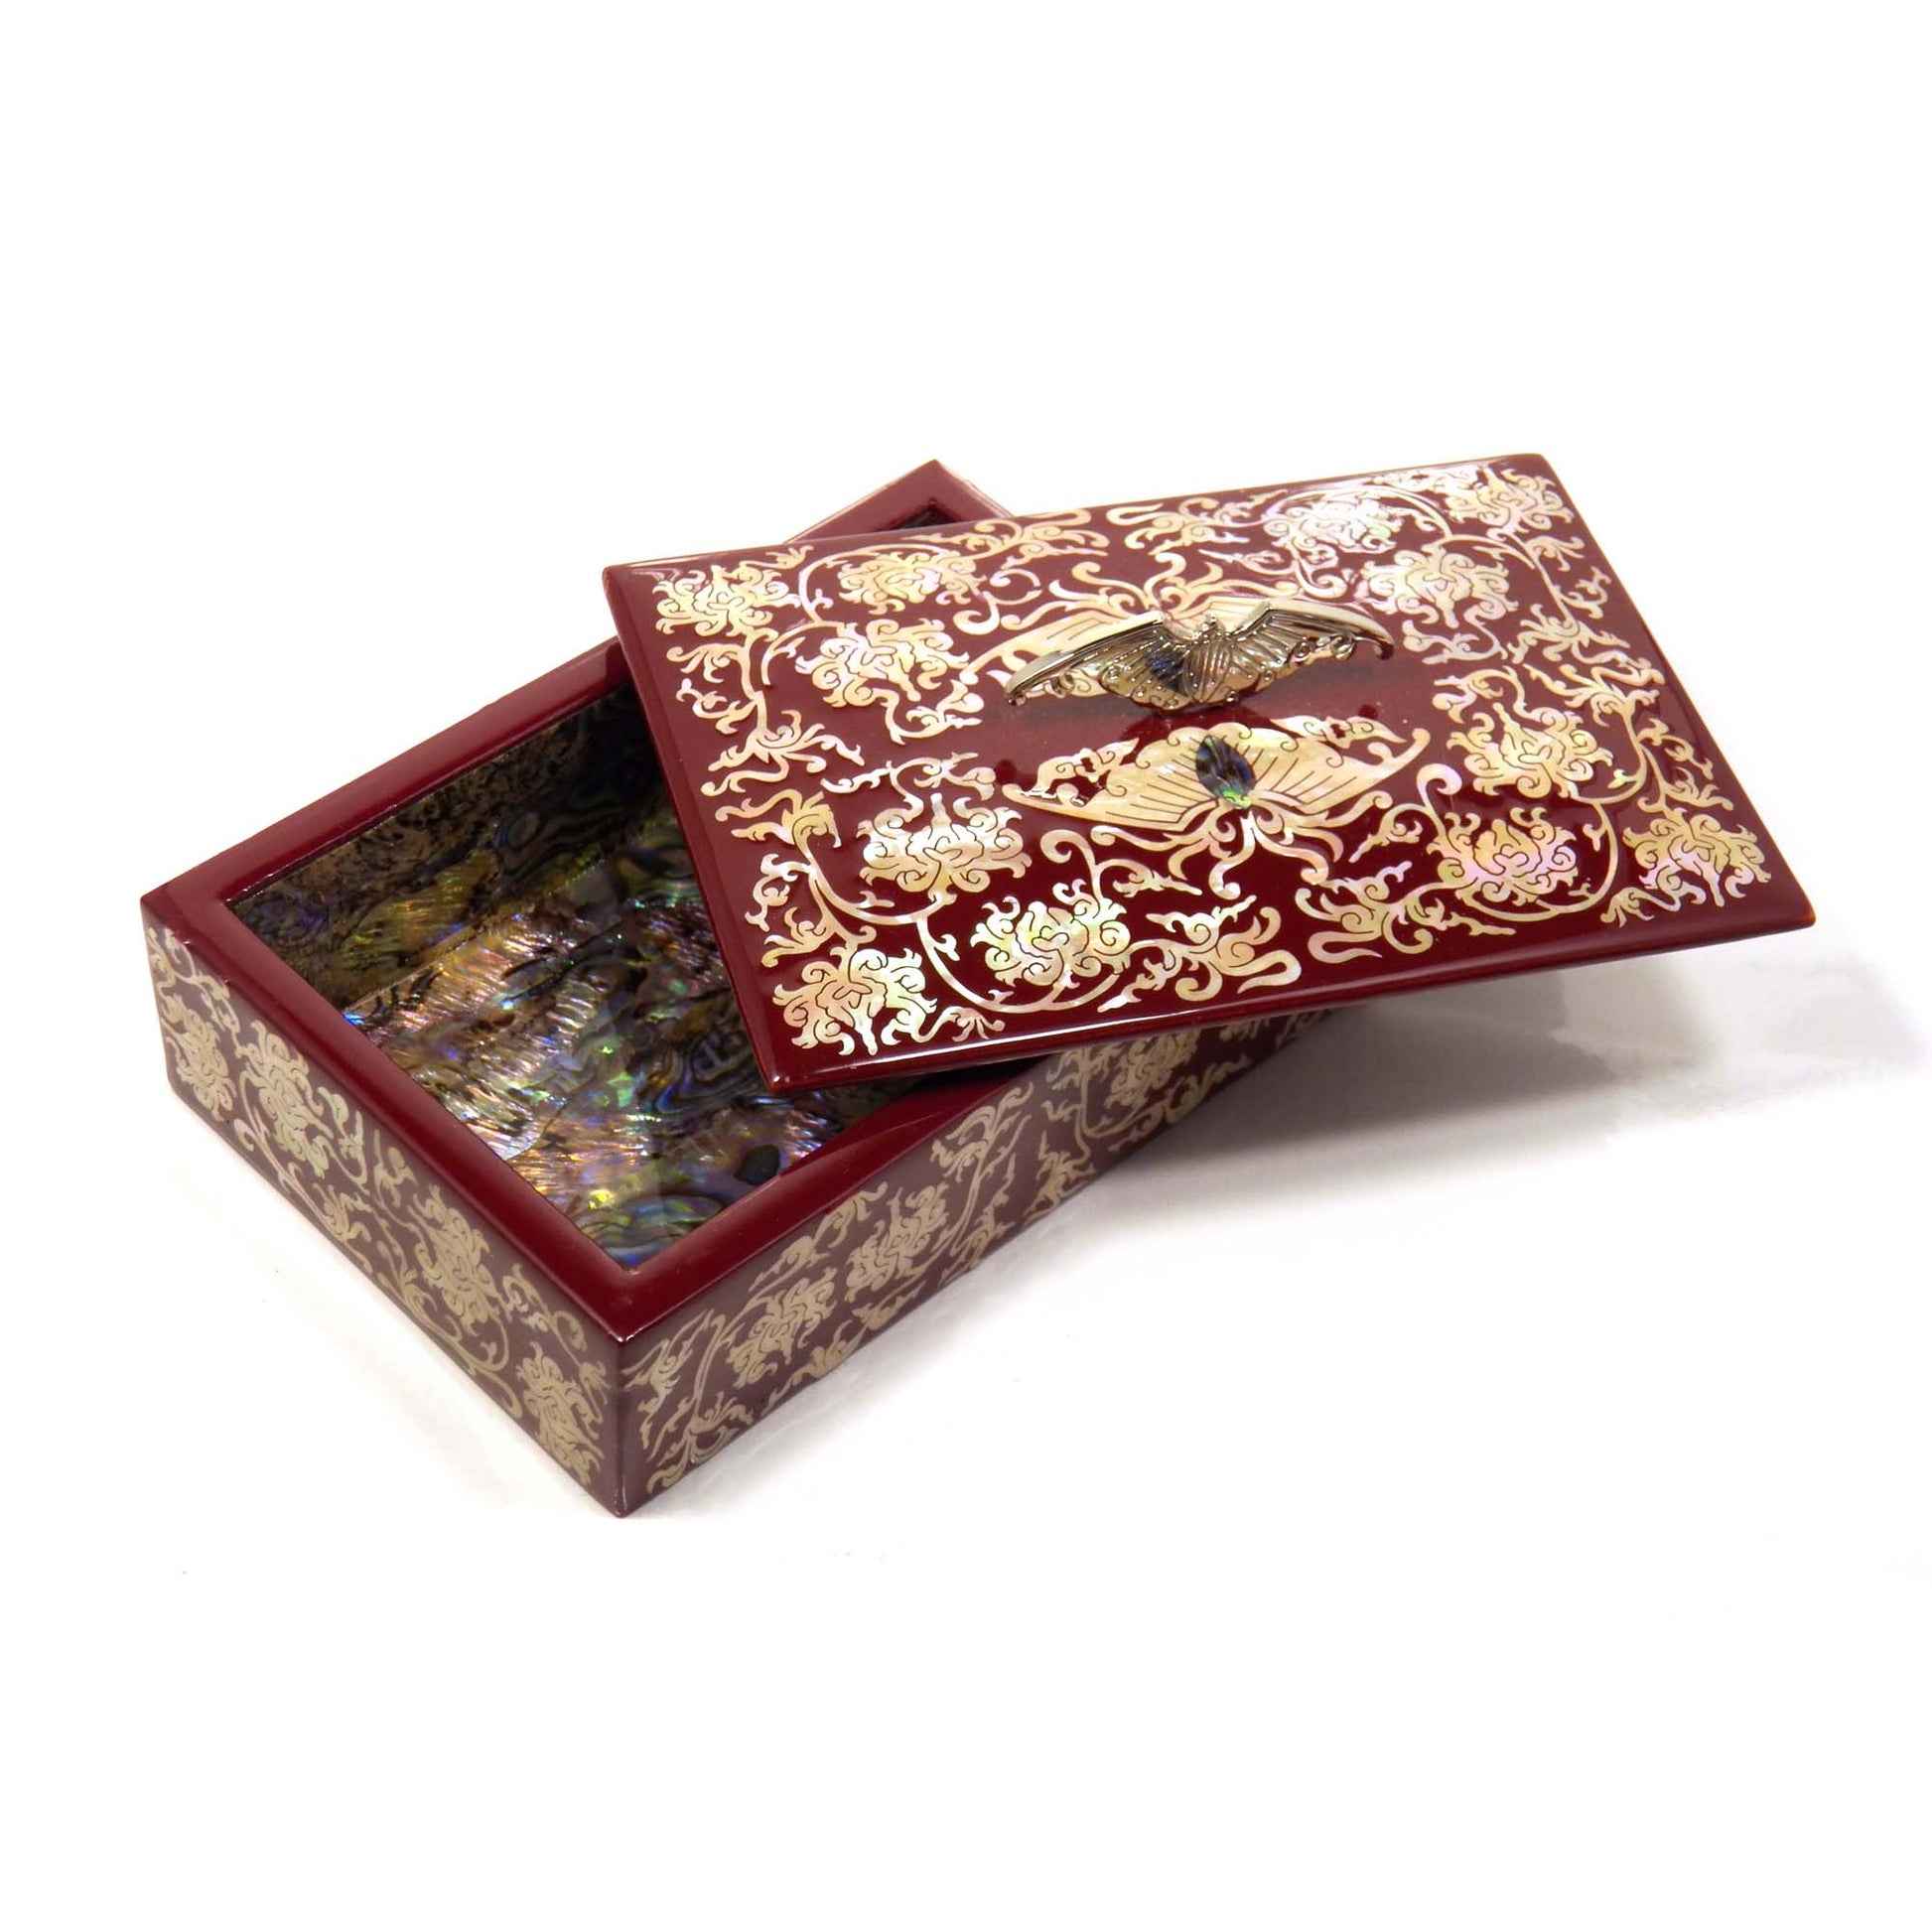 Bat design jewelry box by Kawa Korea 